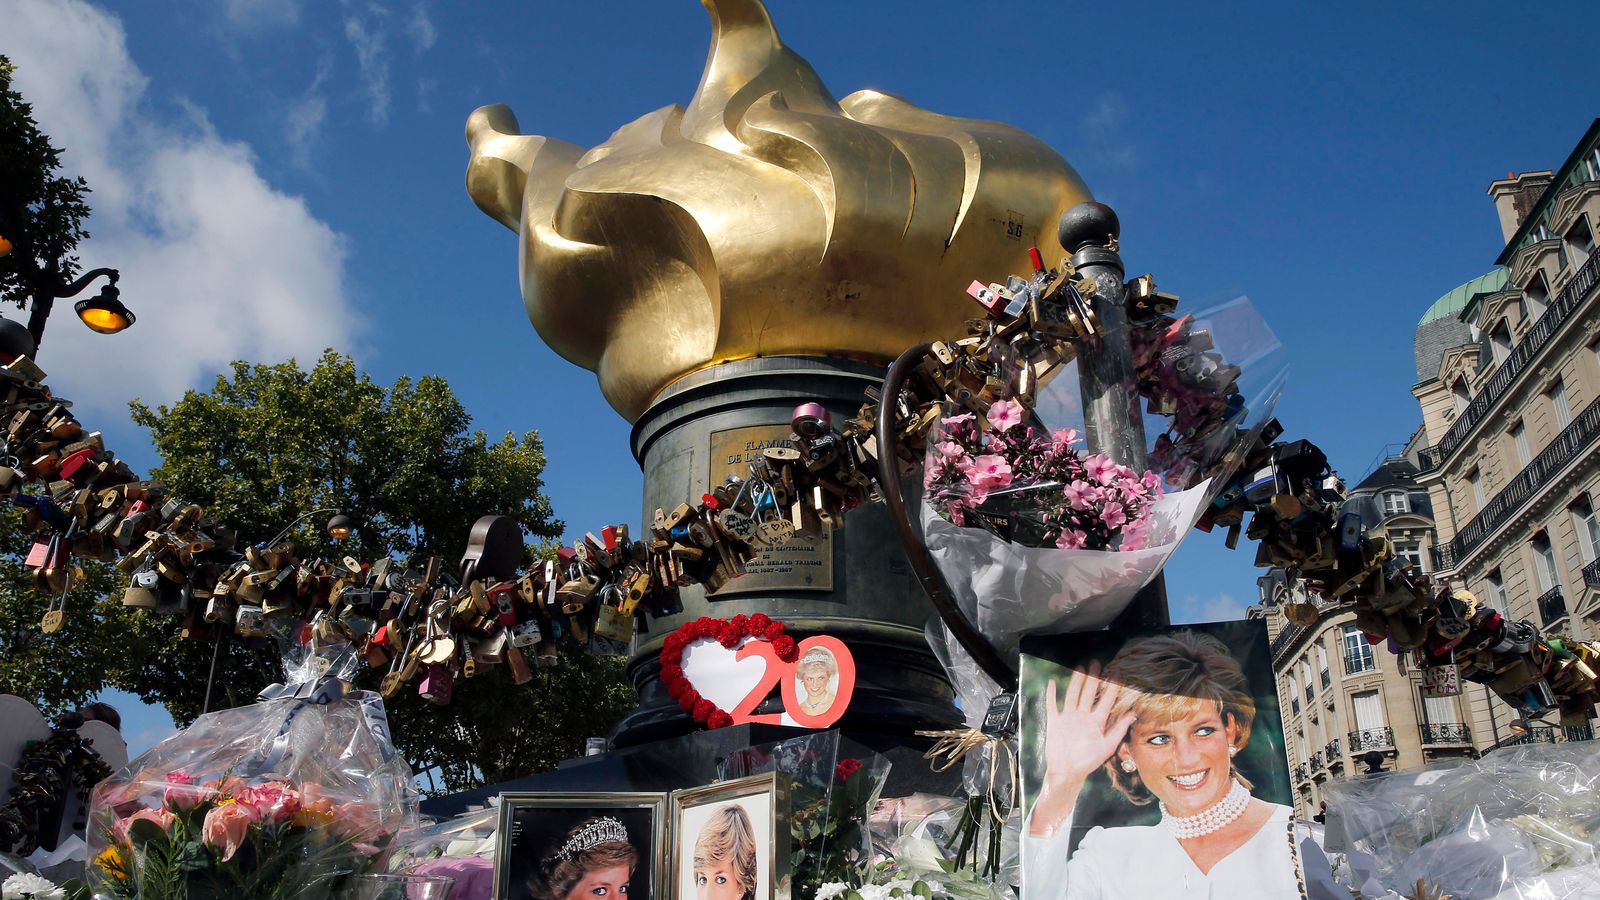 Download Paris plans 'Princess Diana Square' at site where she died ...